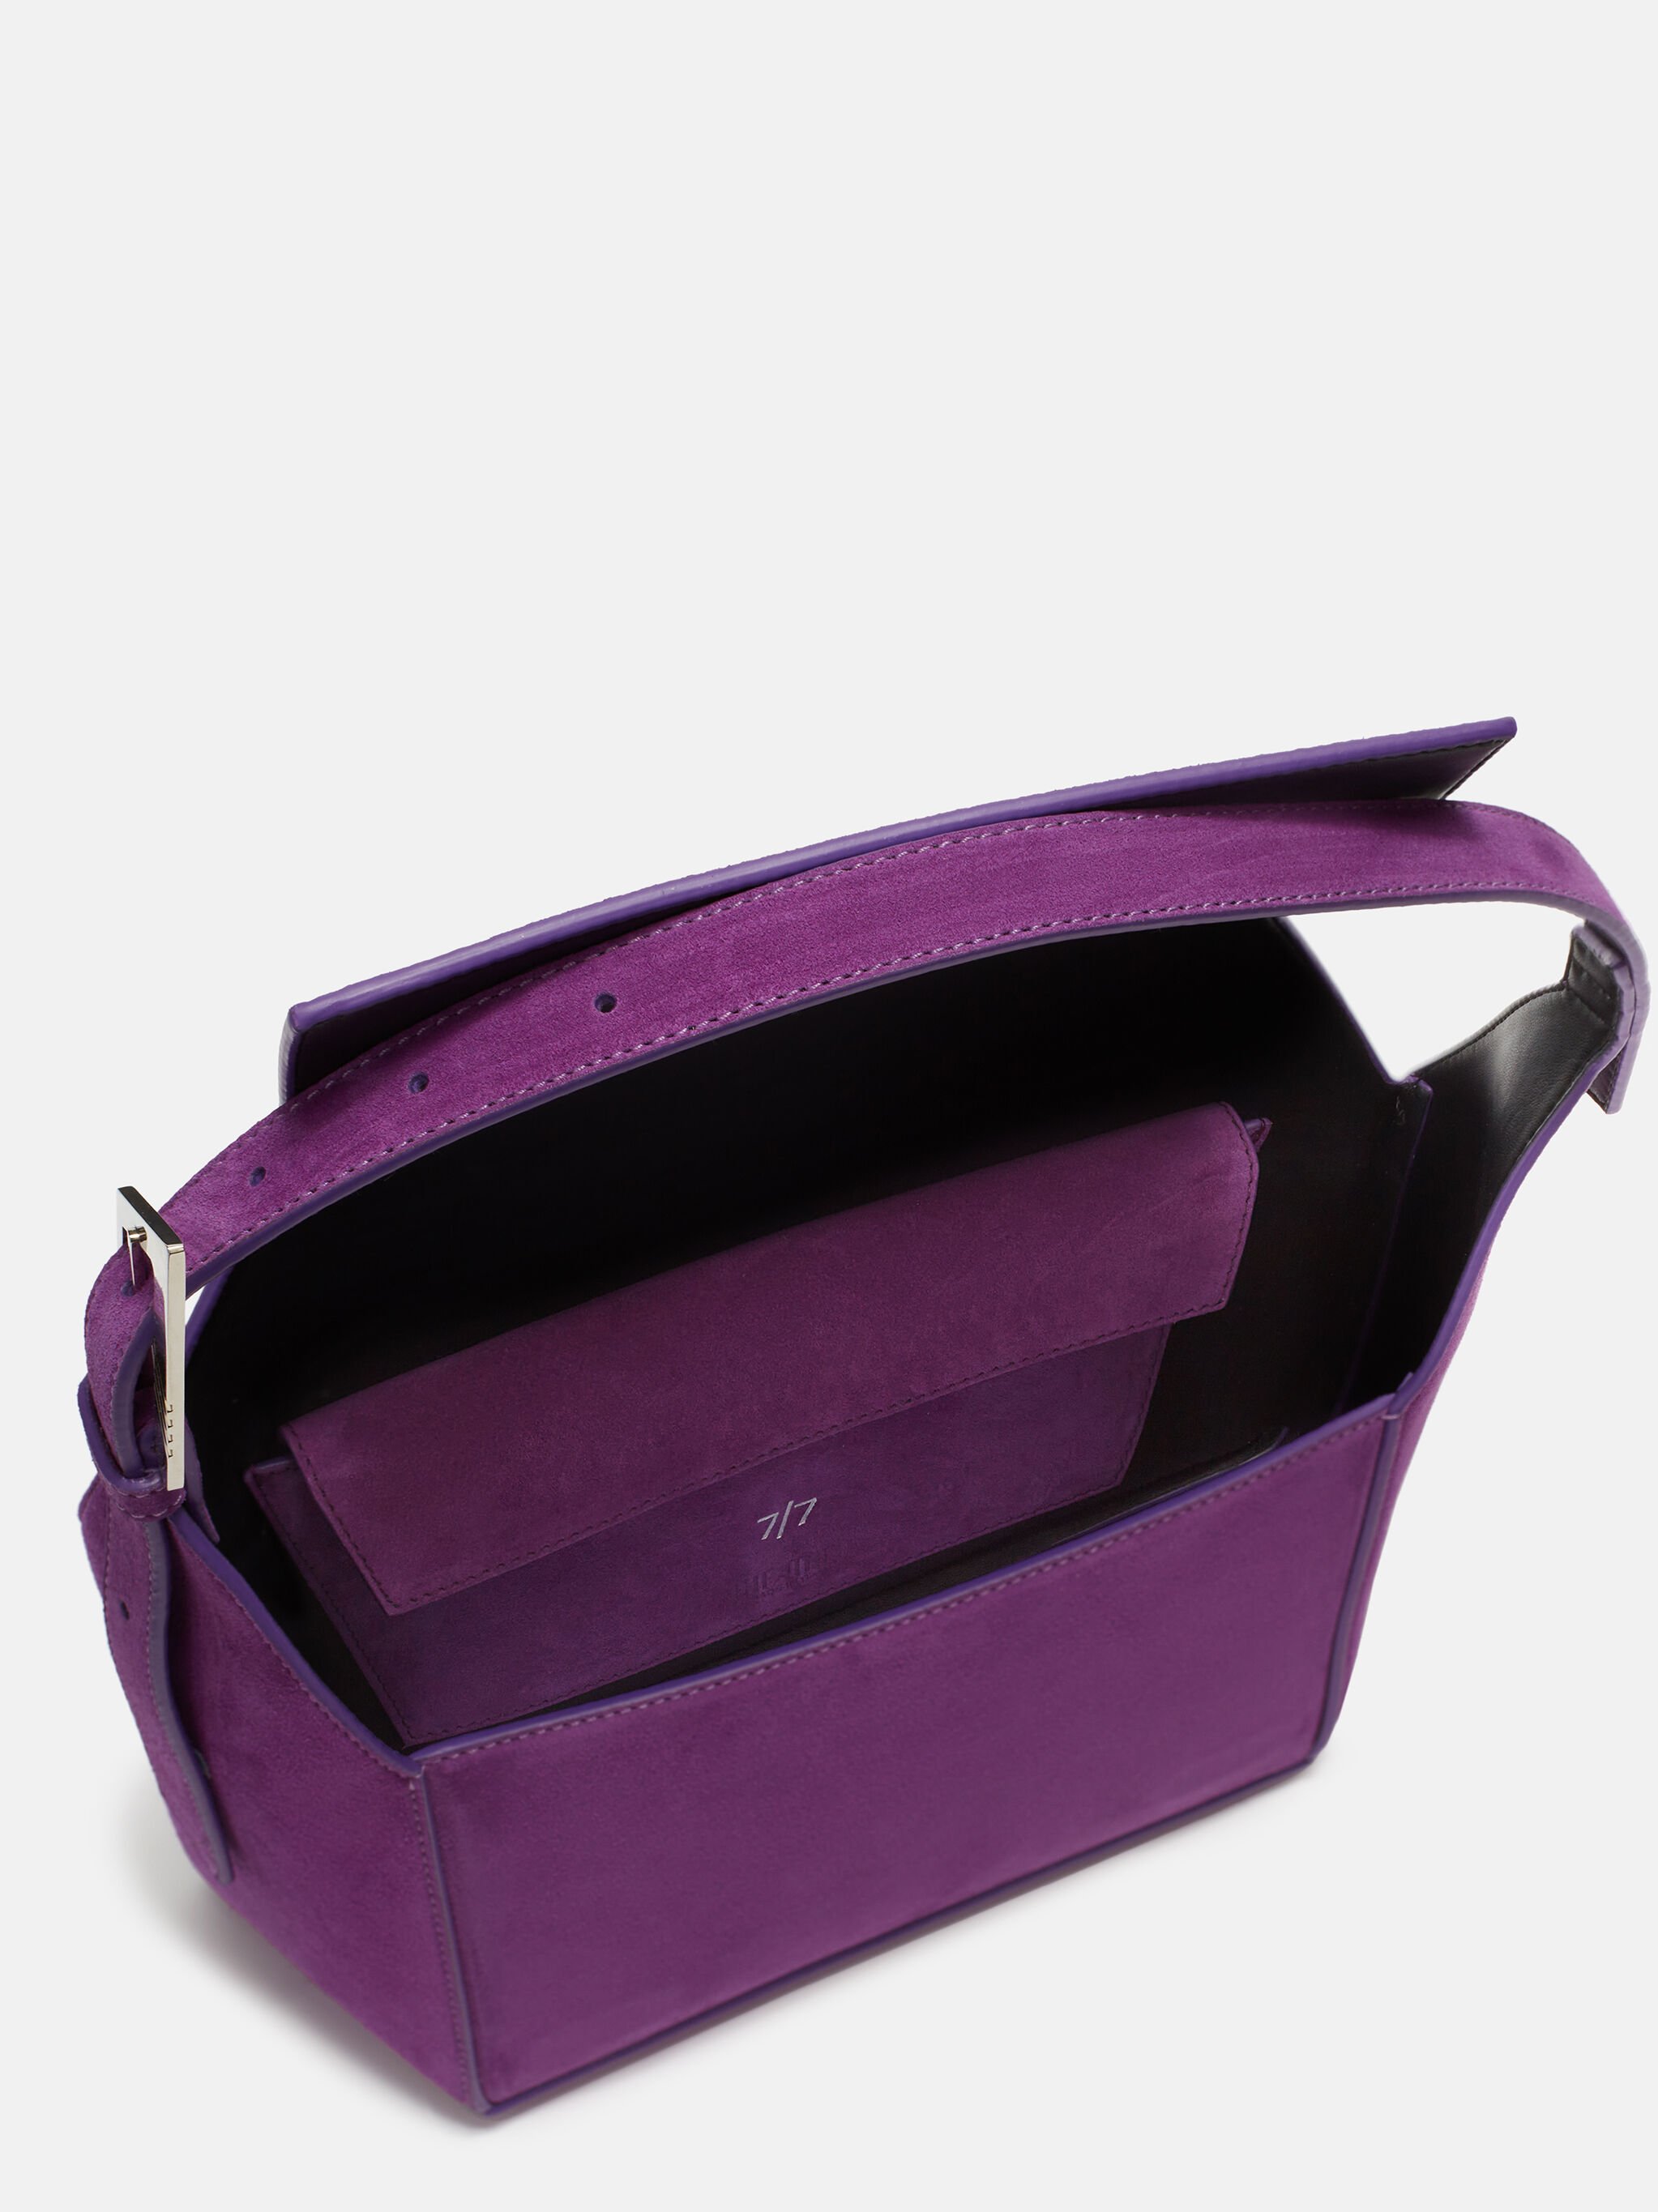 The Attico logo-detail suede tote bag - Purple